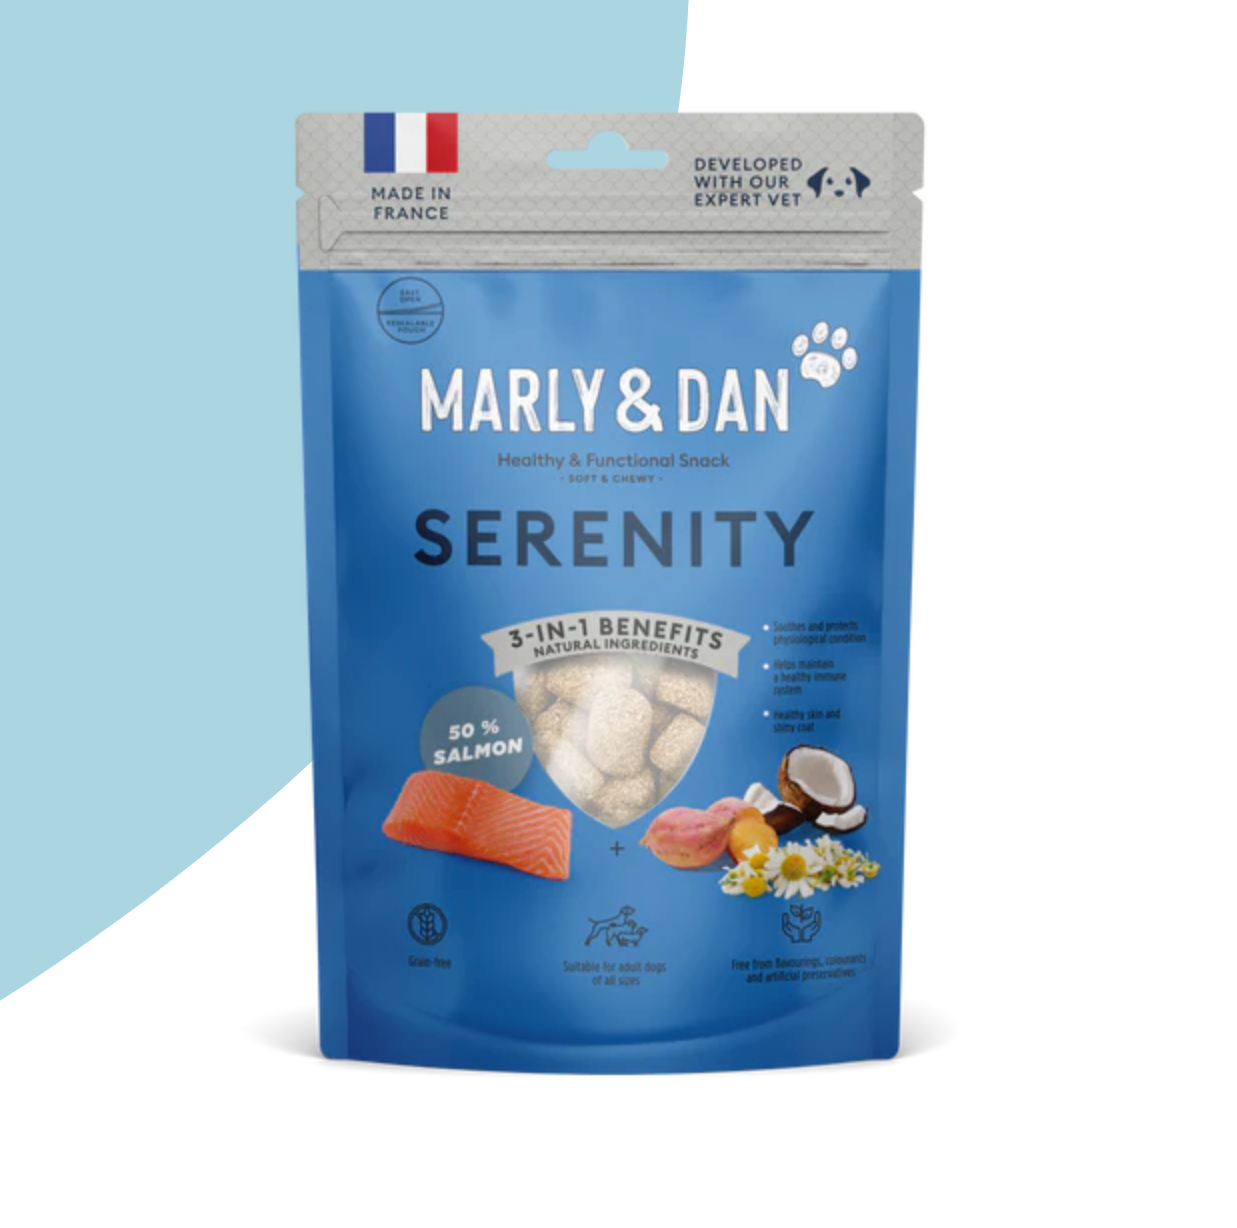 Marly & Dan Serenity